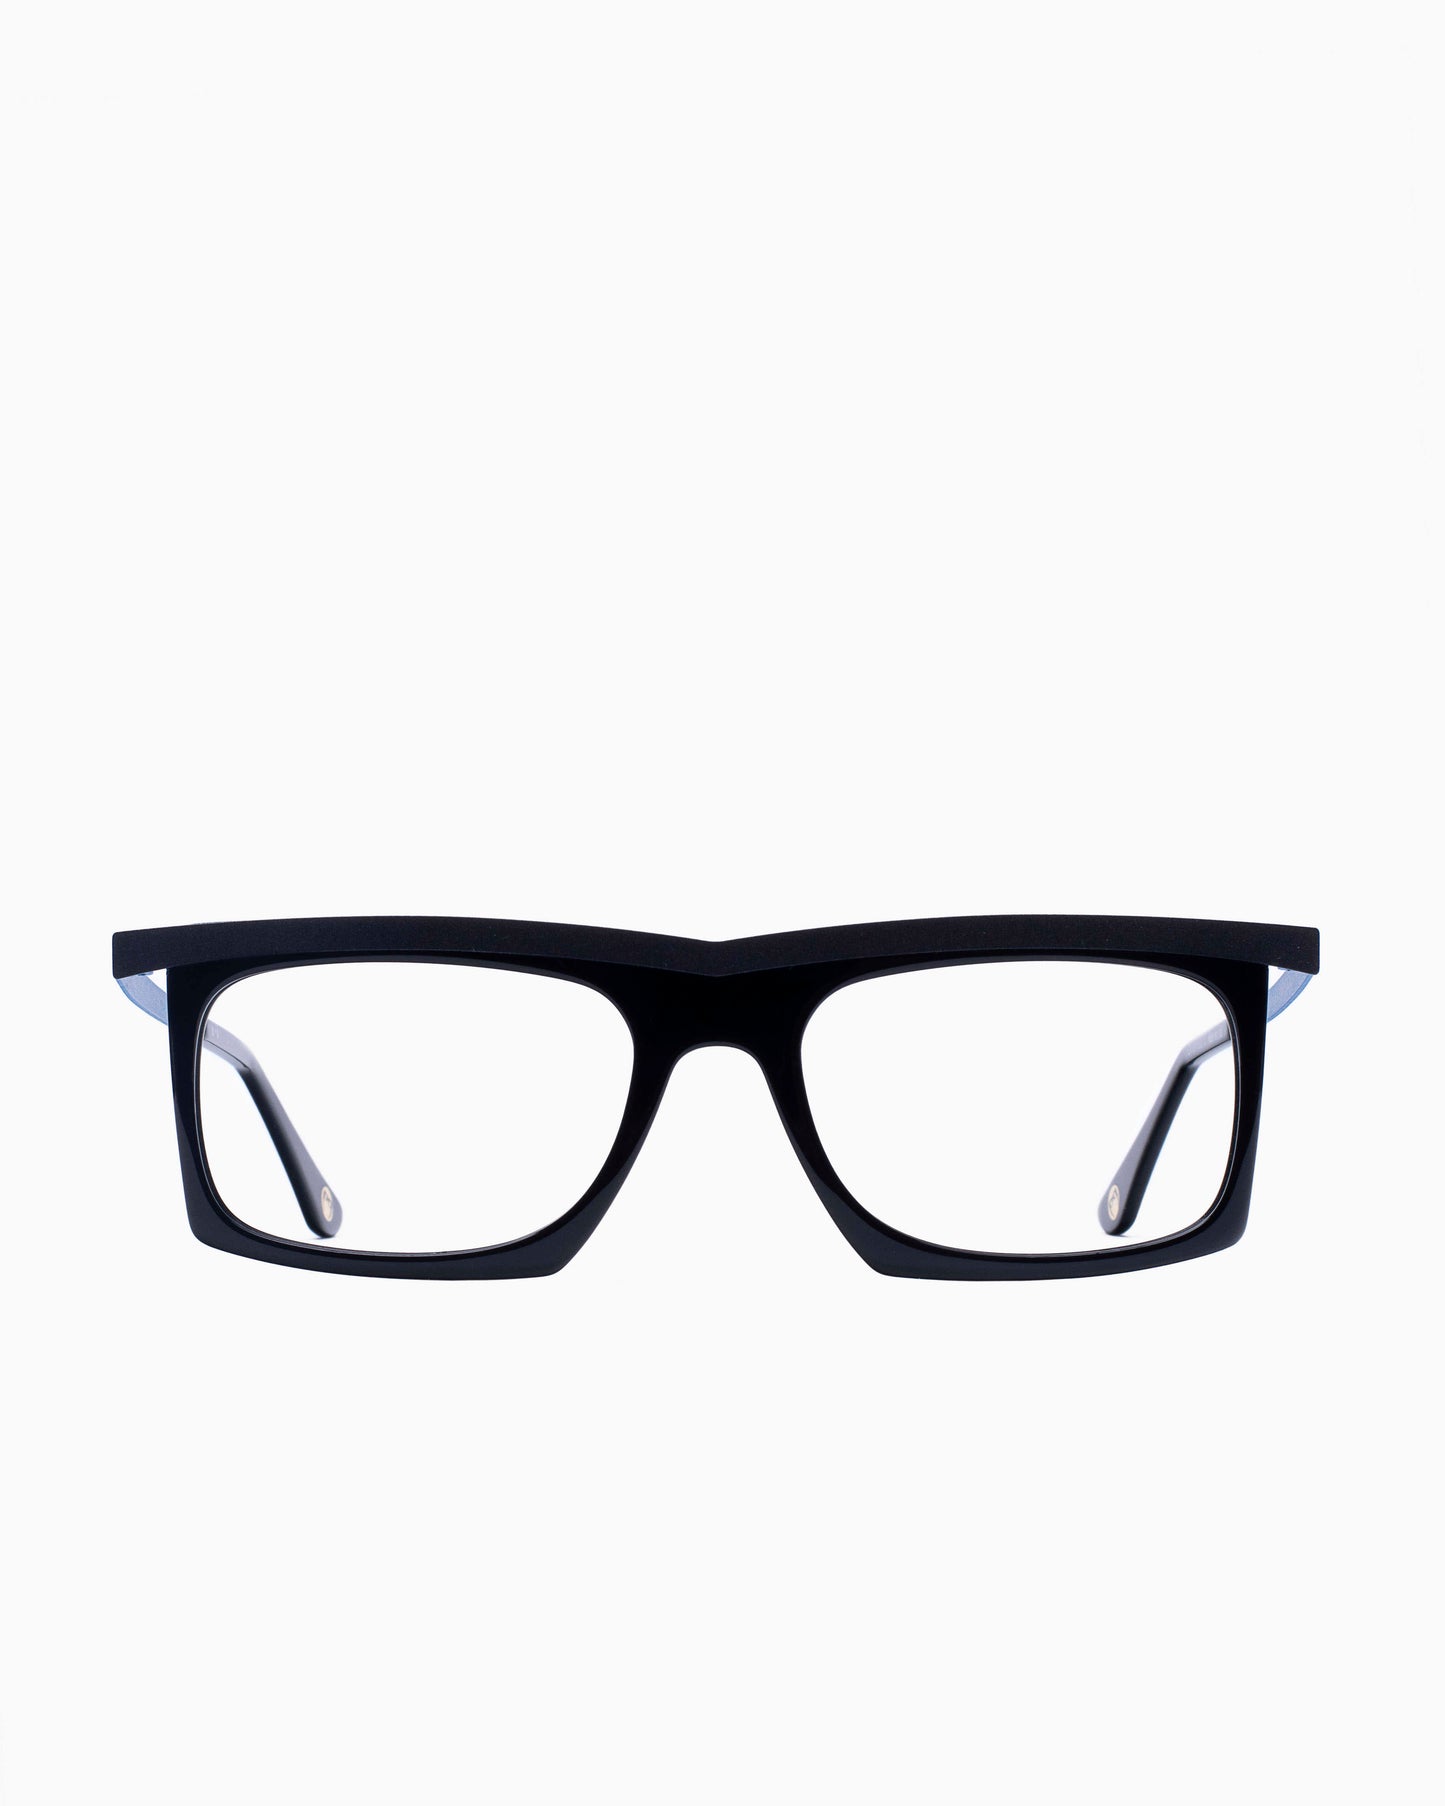 Spectacleeyeworks - Doug - C870 | glasses bar